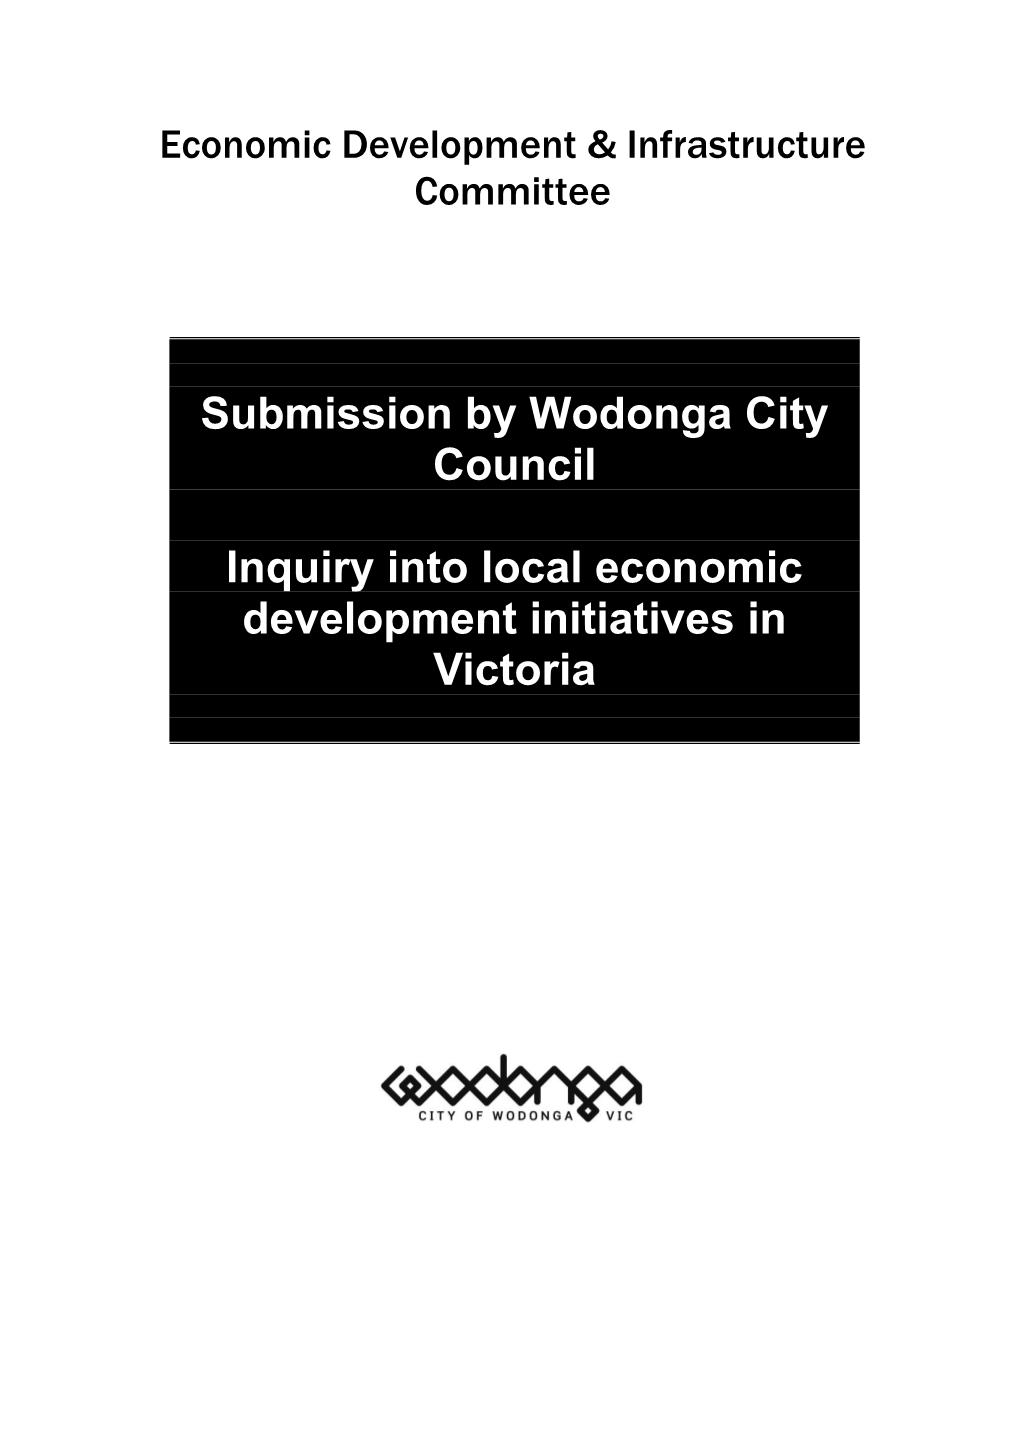 Wodonga City Council